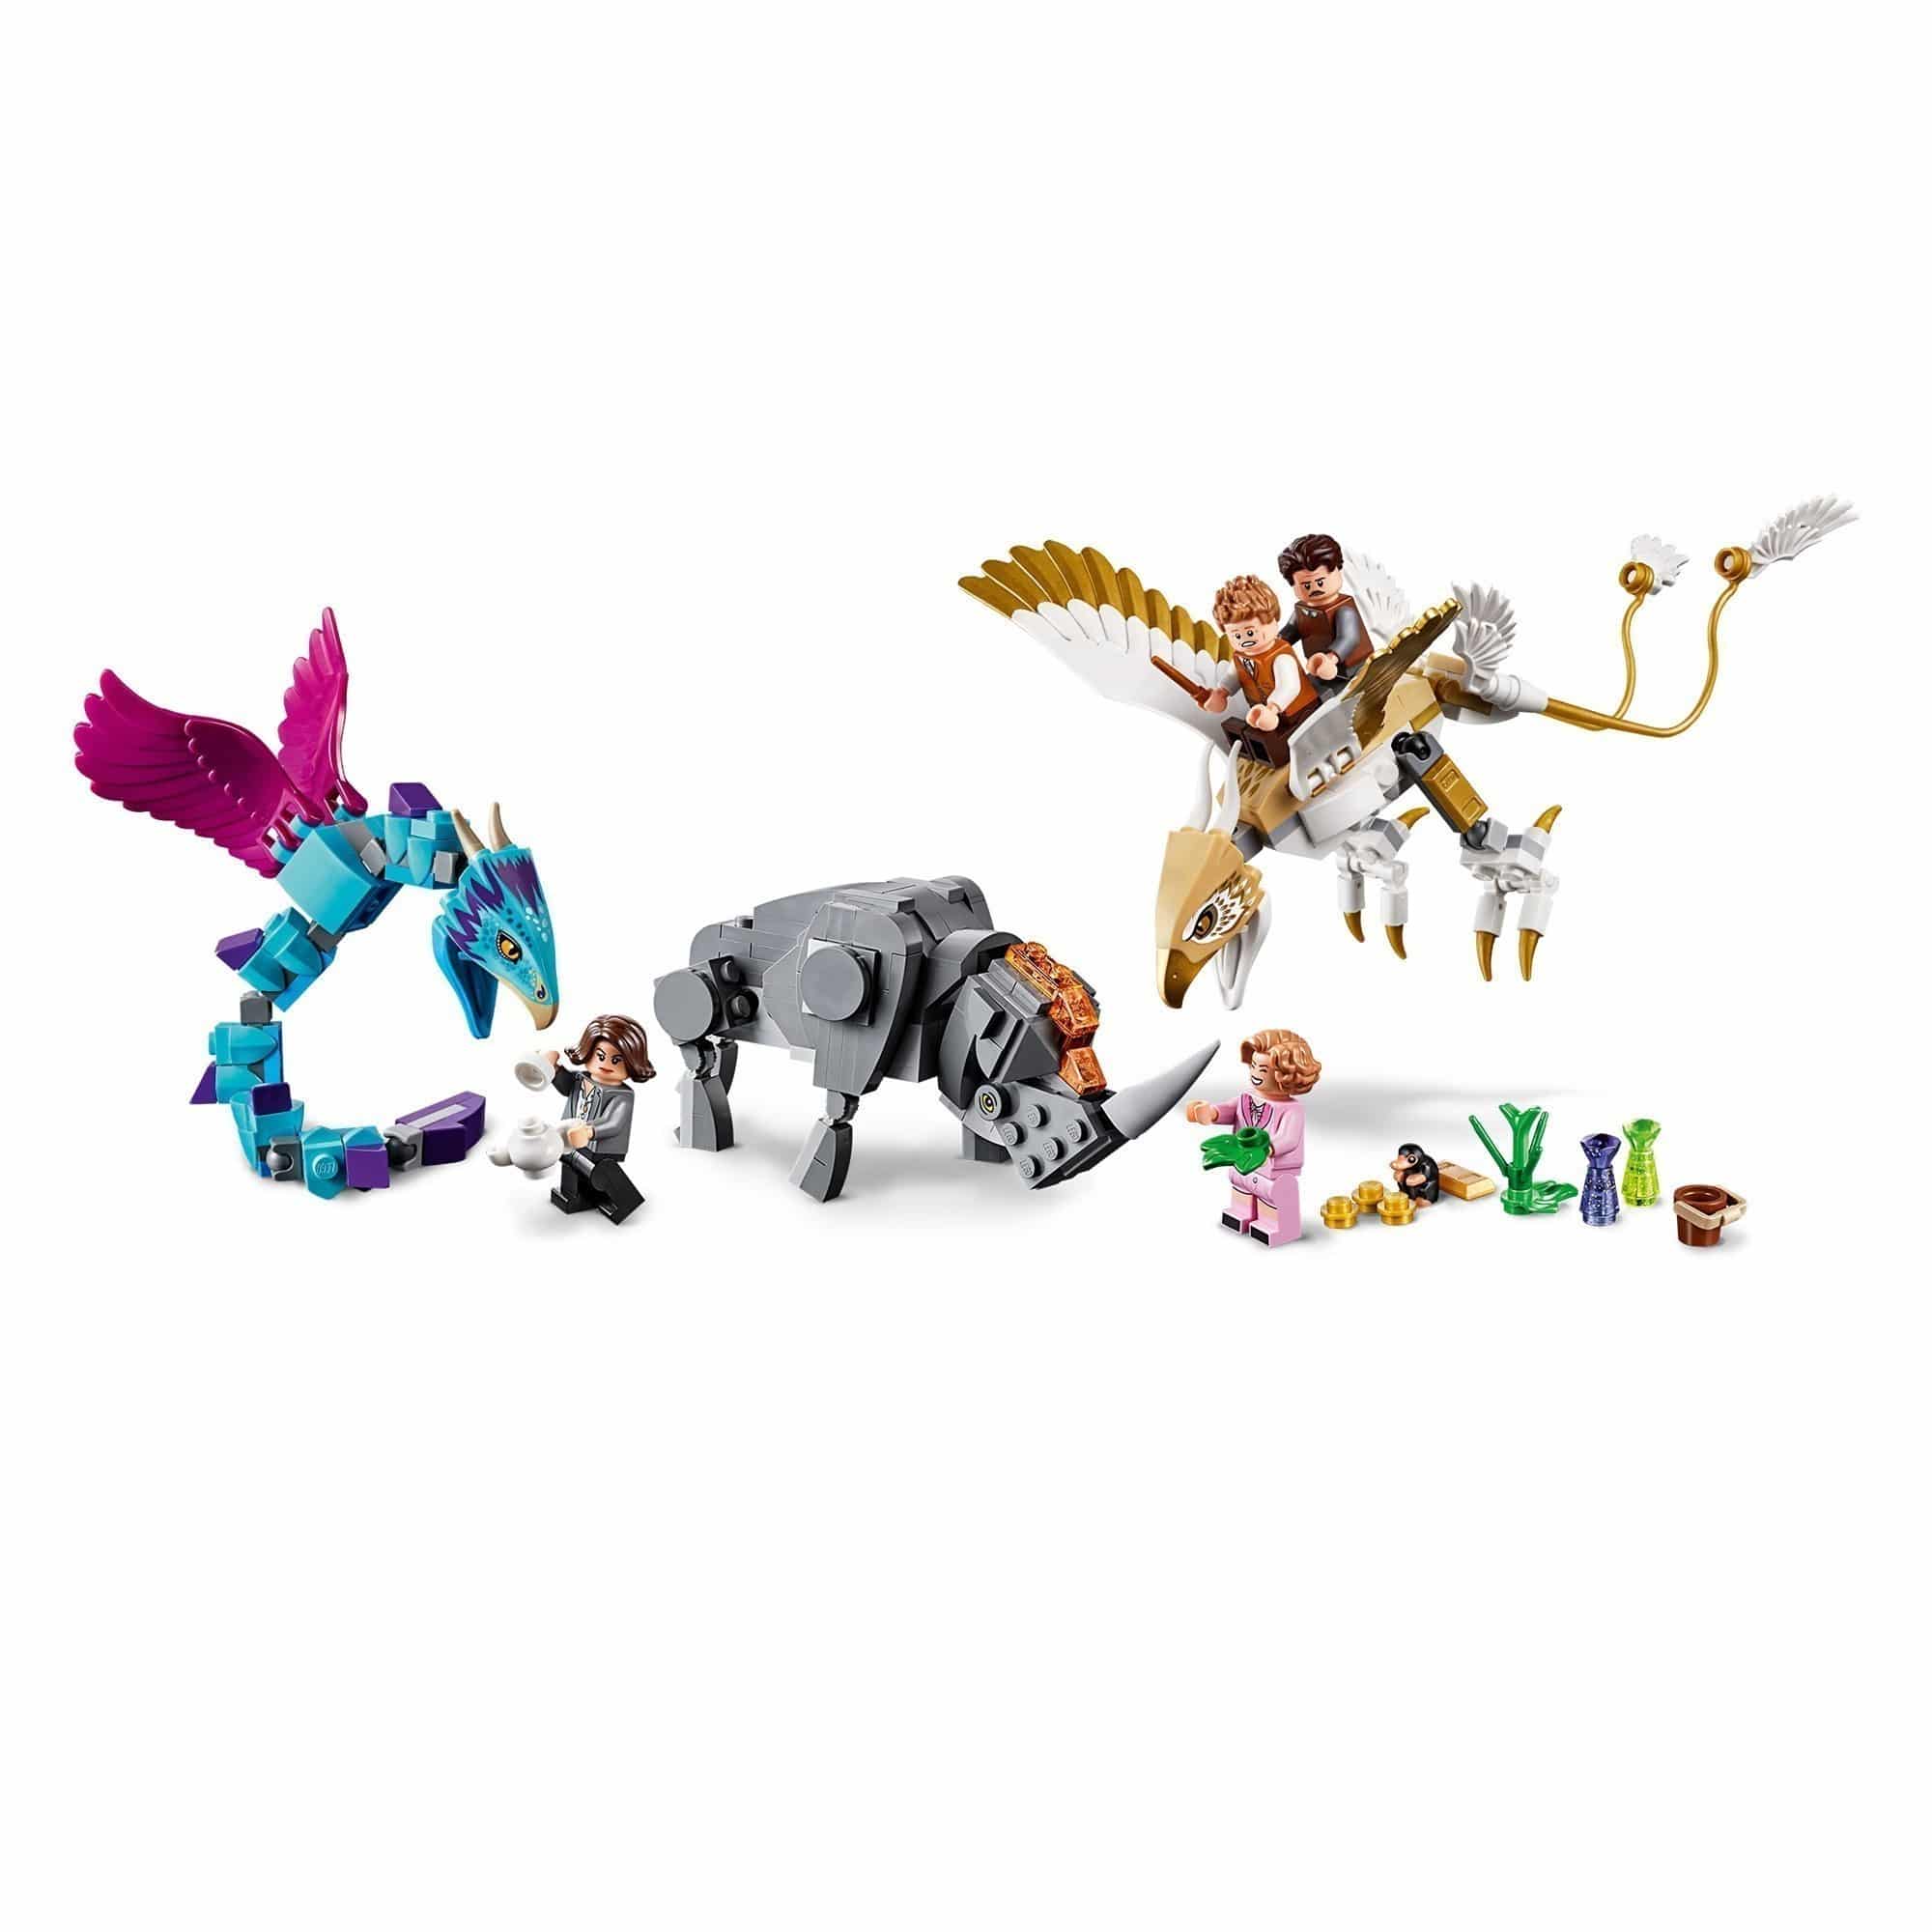 LEGO® - Fantastic Beasts™ - 75952 Newt's Case of Magical Creatures